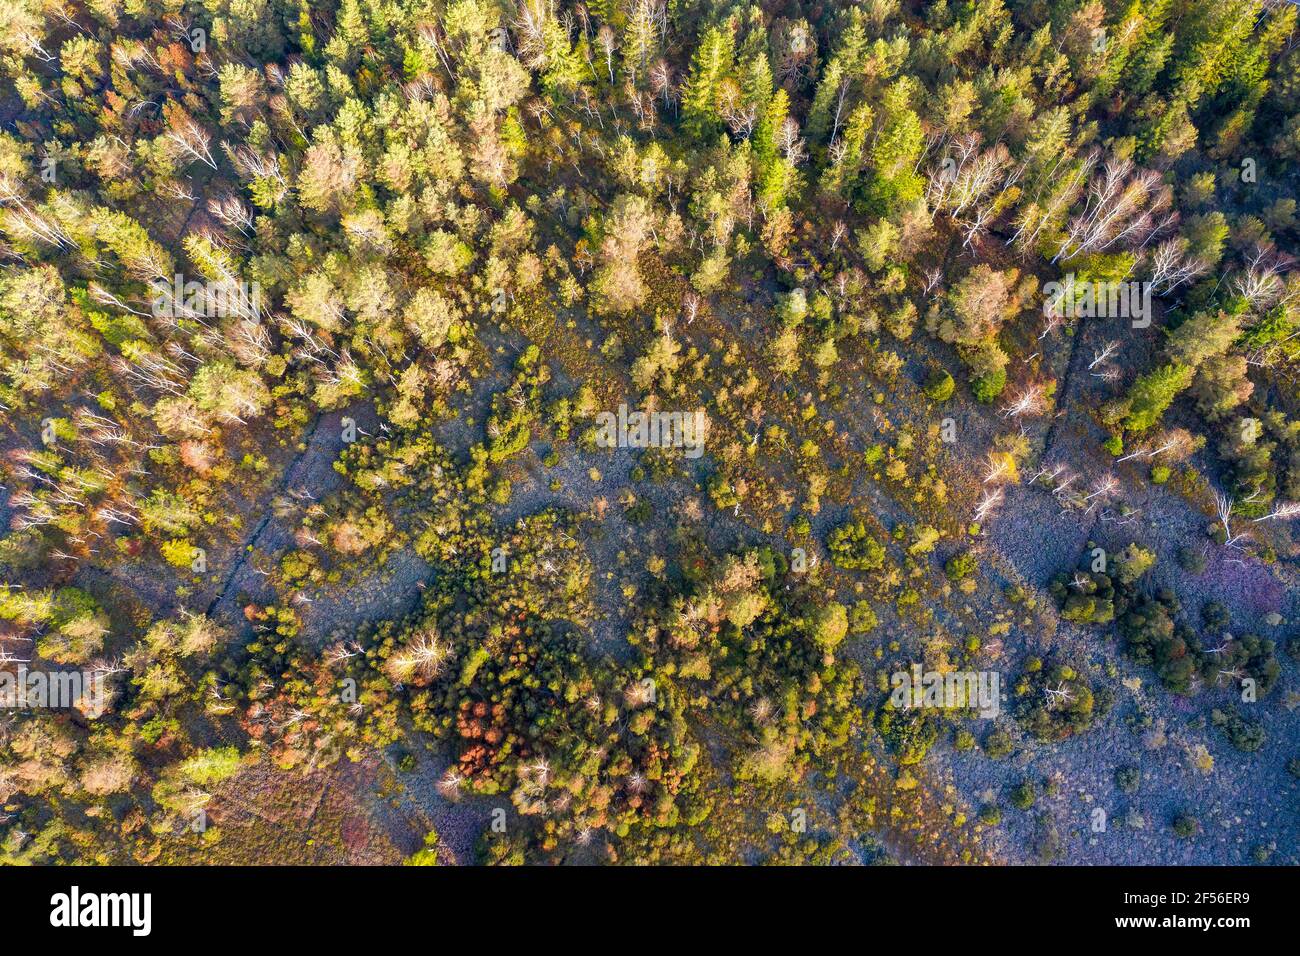 Germany, Bavaria, Konigsdorf, Aerial view of forest Stock Photo